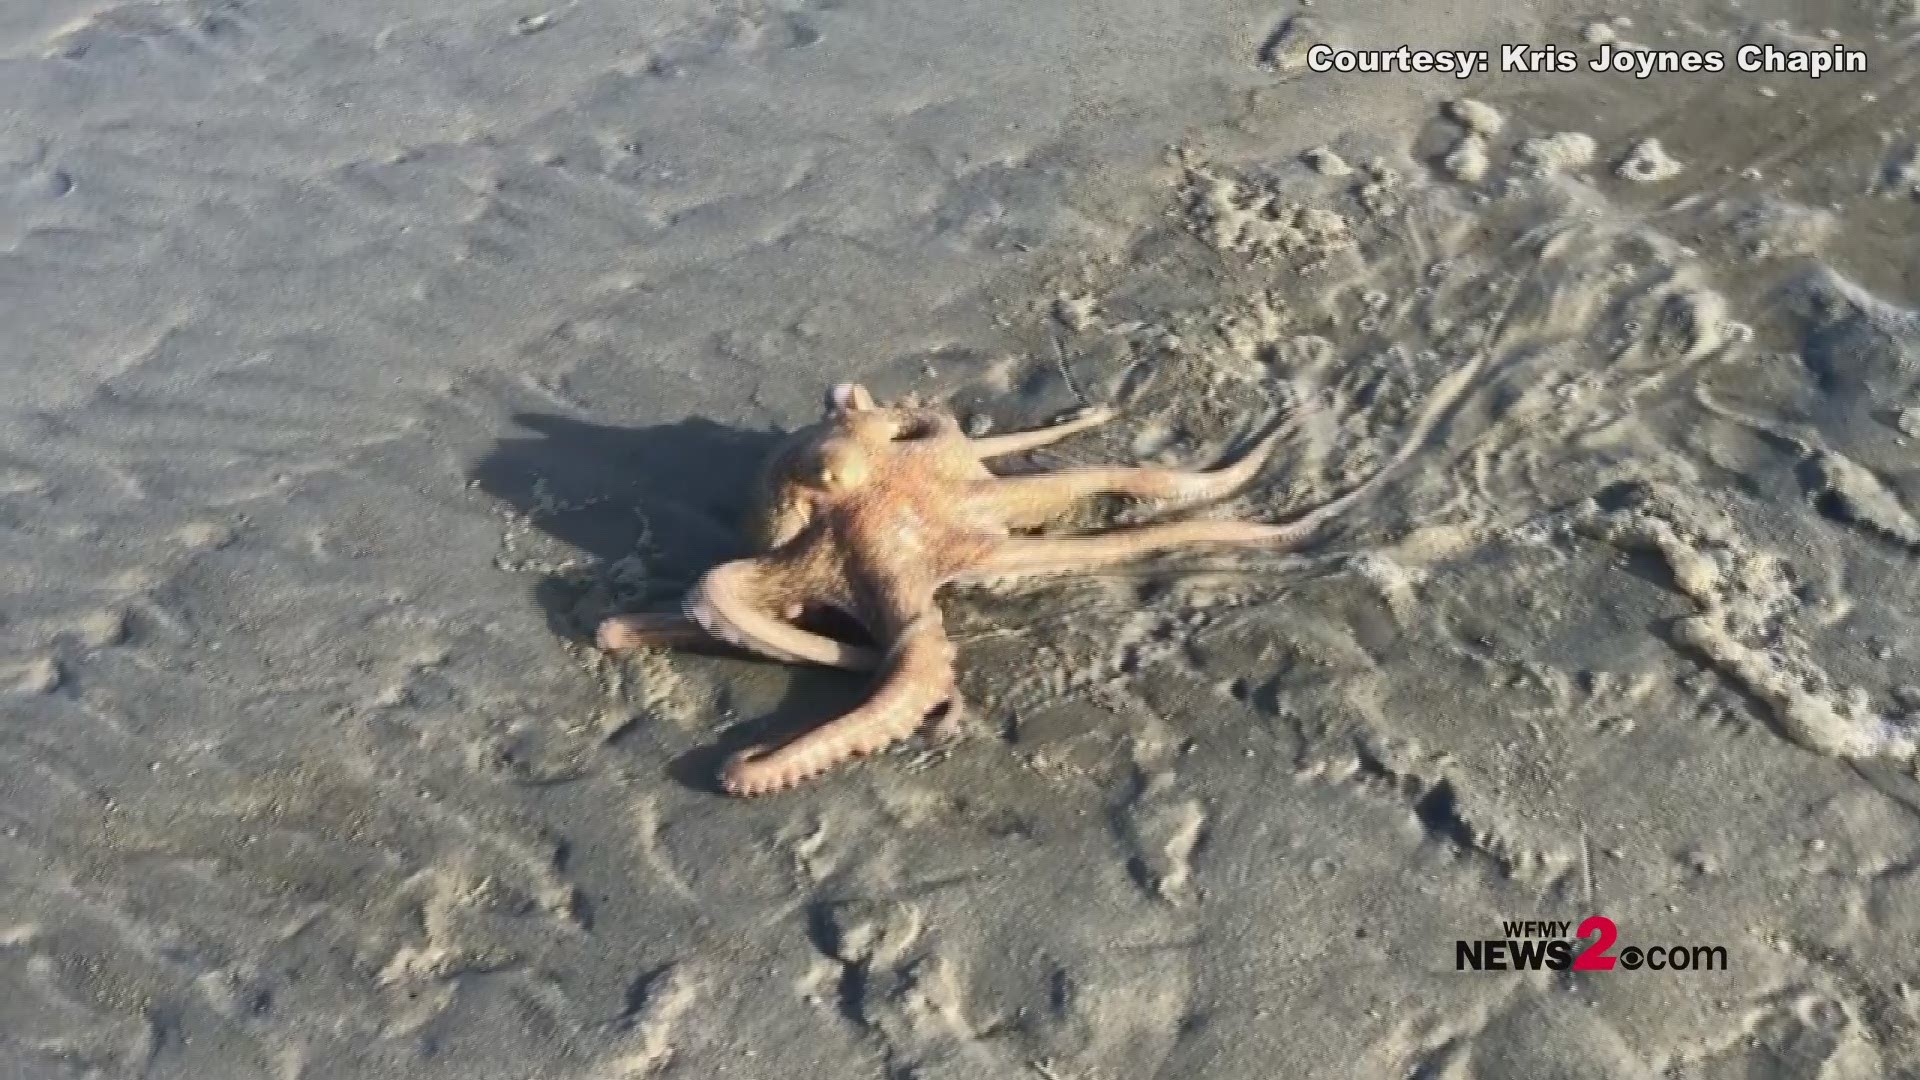 Octopus captured taking a stroll along the sandbar at Topsail Beach in NC.